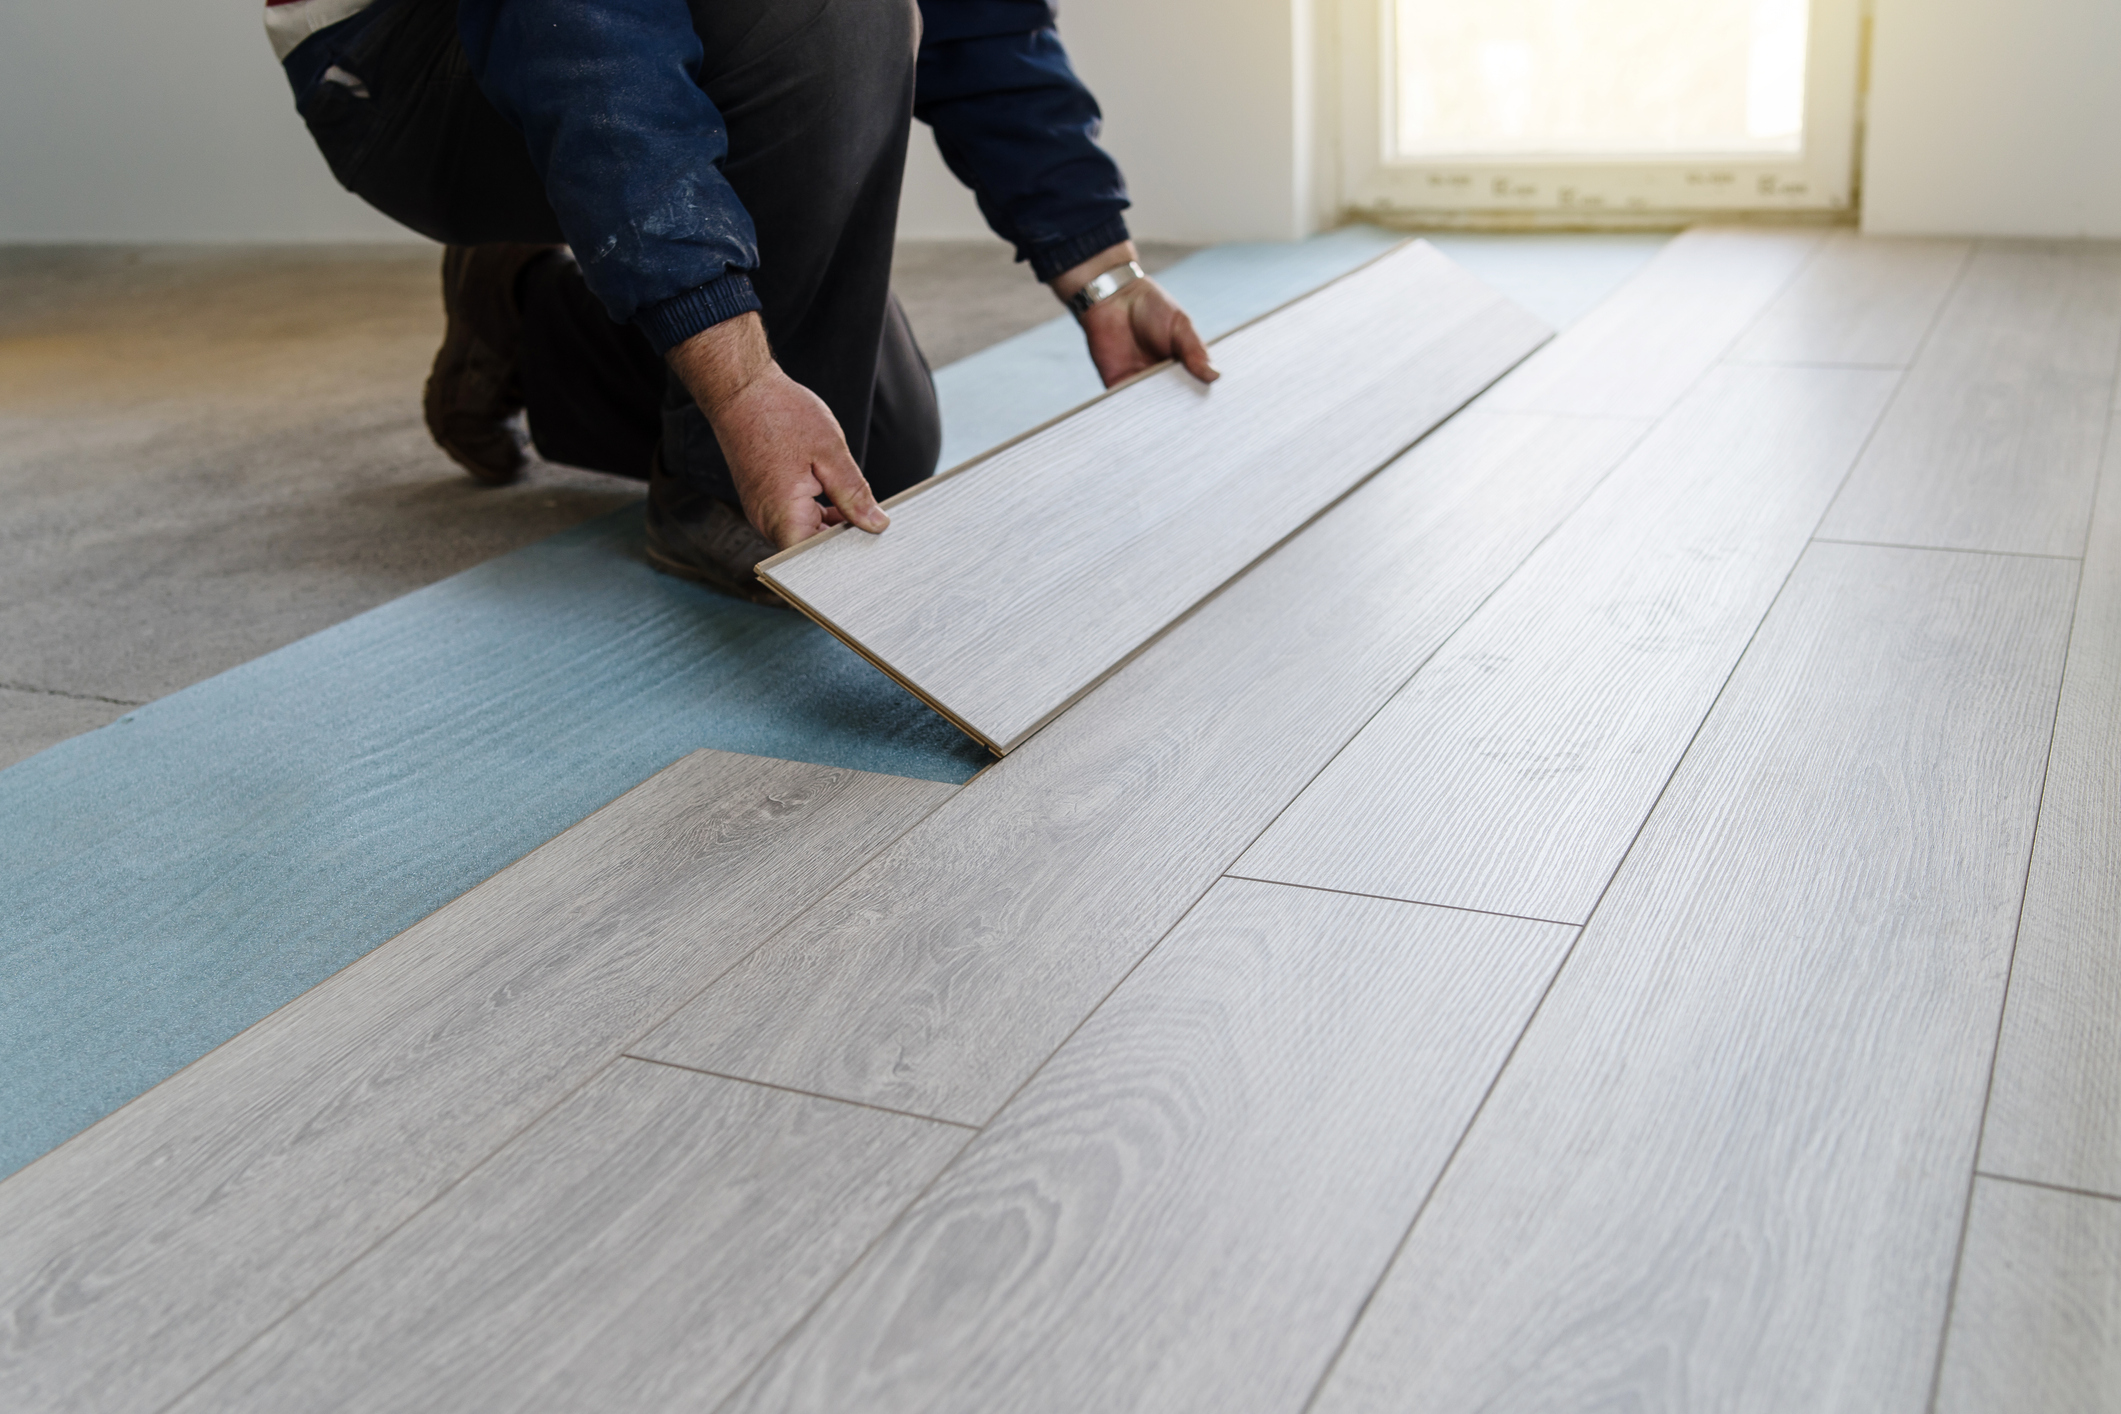 Easy Temporary Flooring Ideas, Can Carpet Be Installed Over Vinyl Flooring